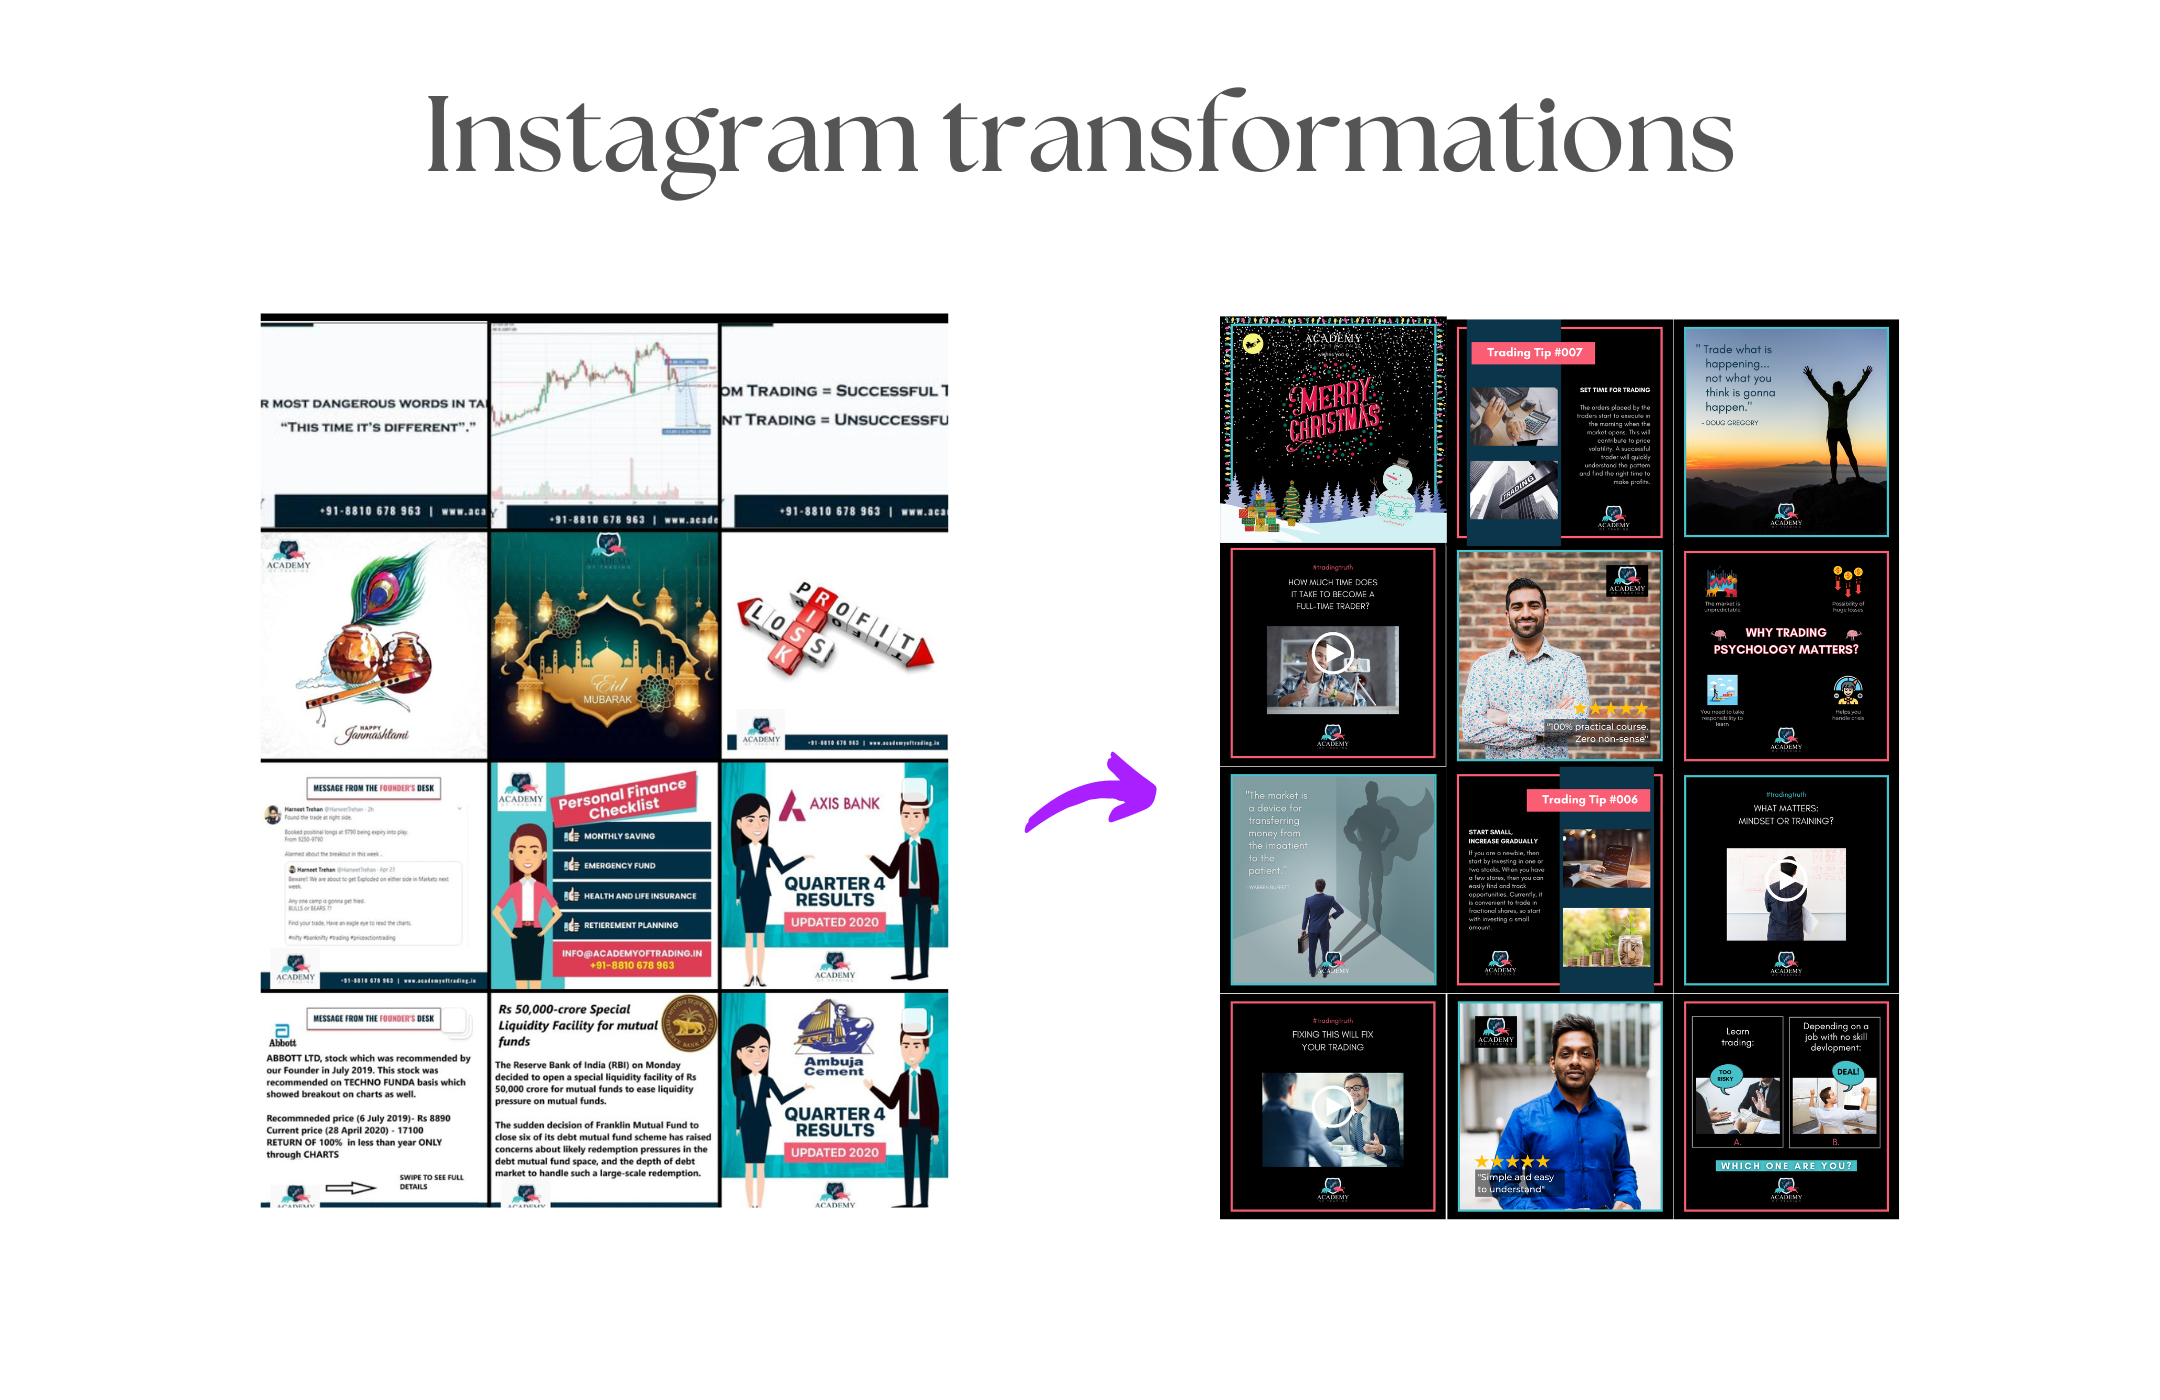 Instagram transformations